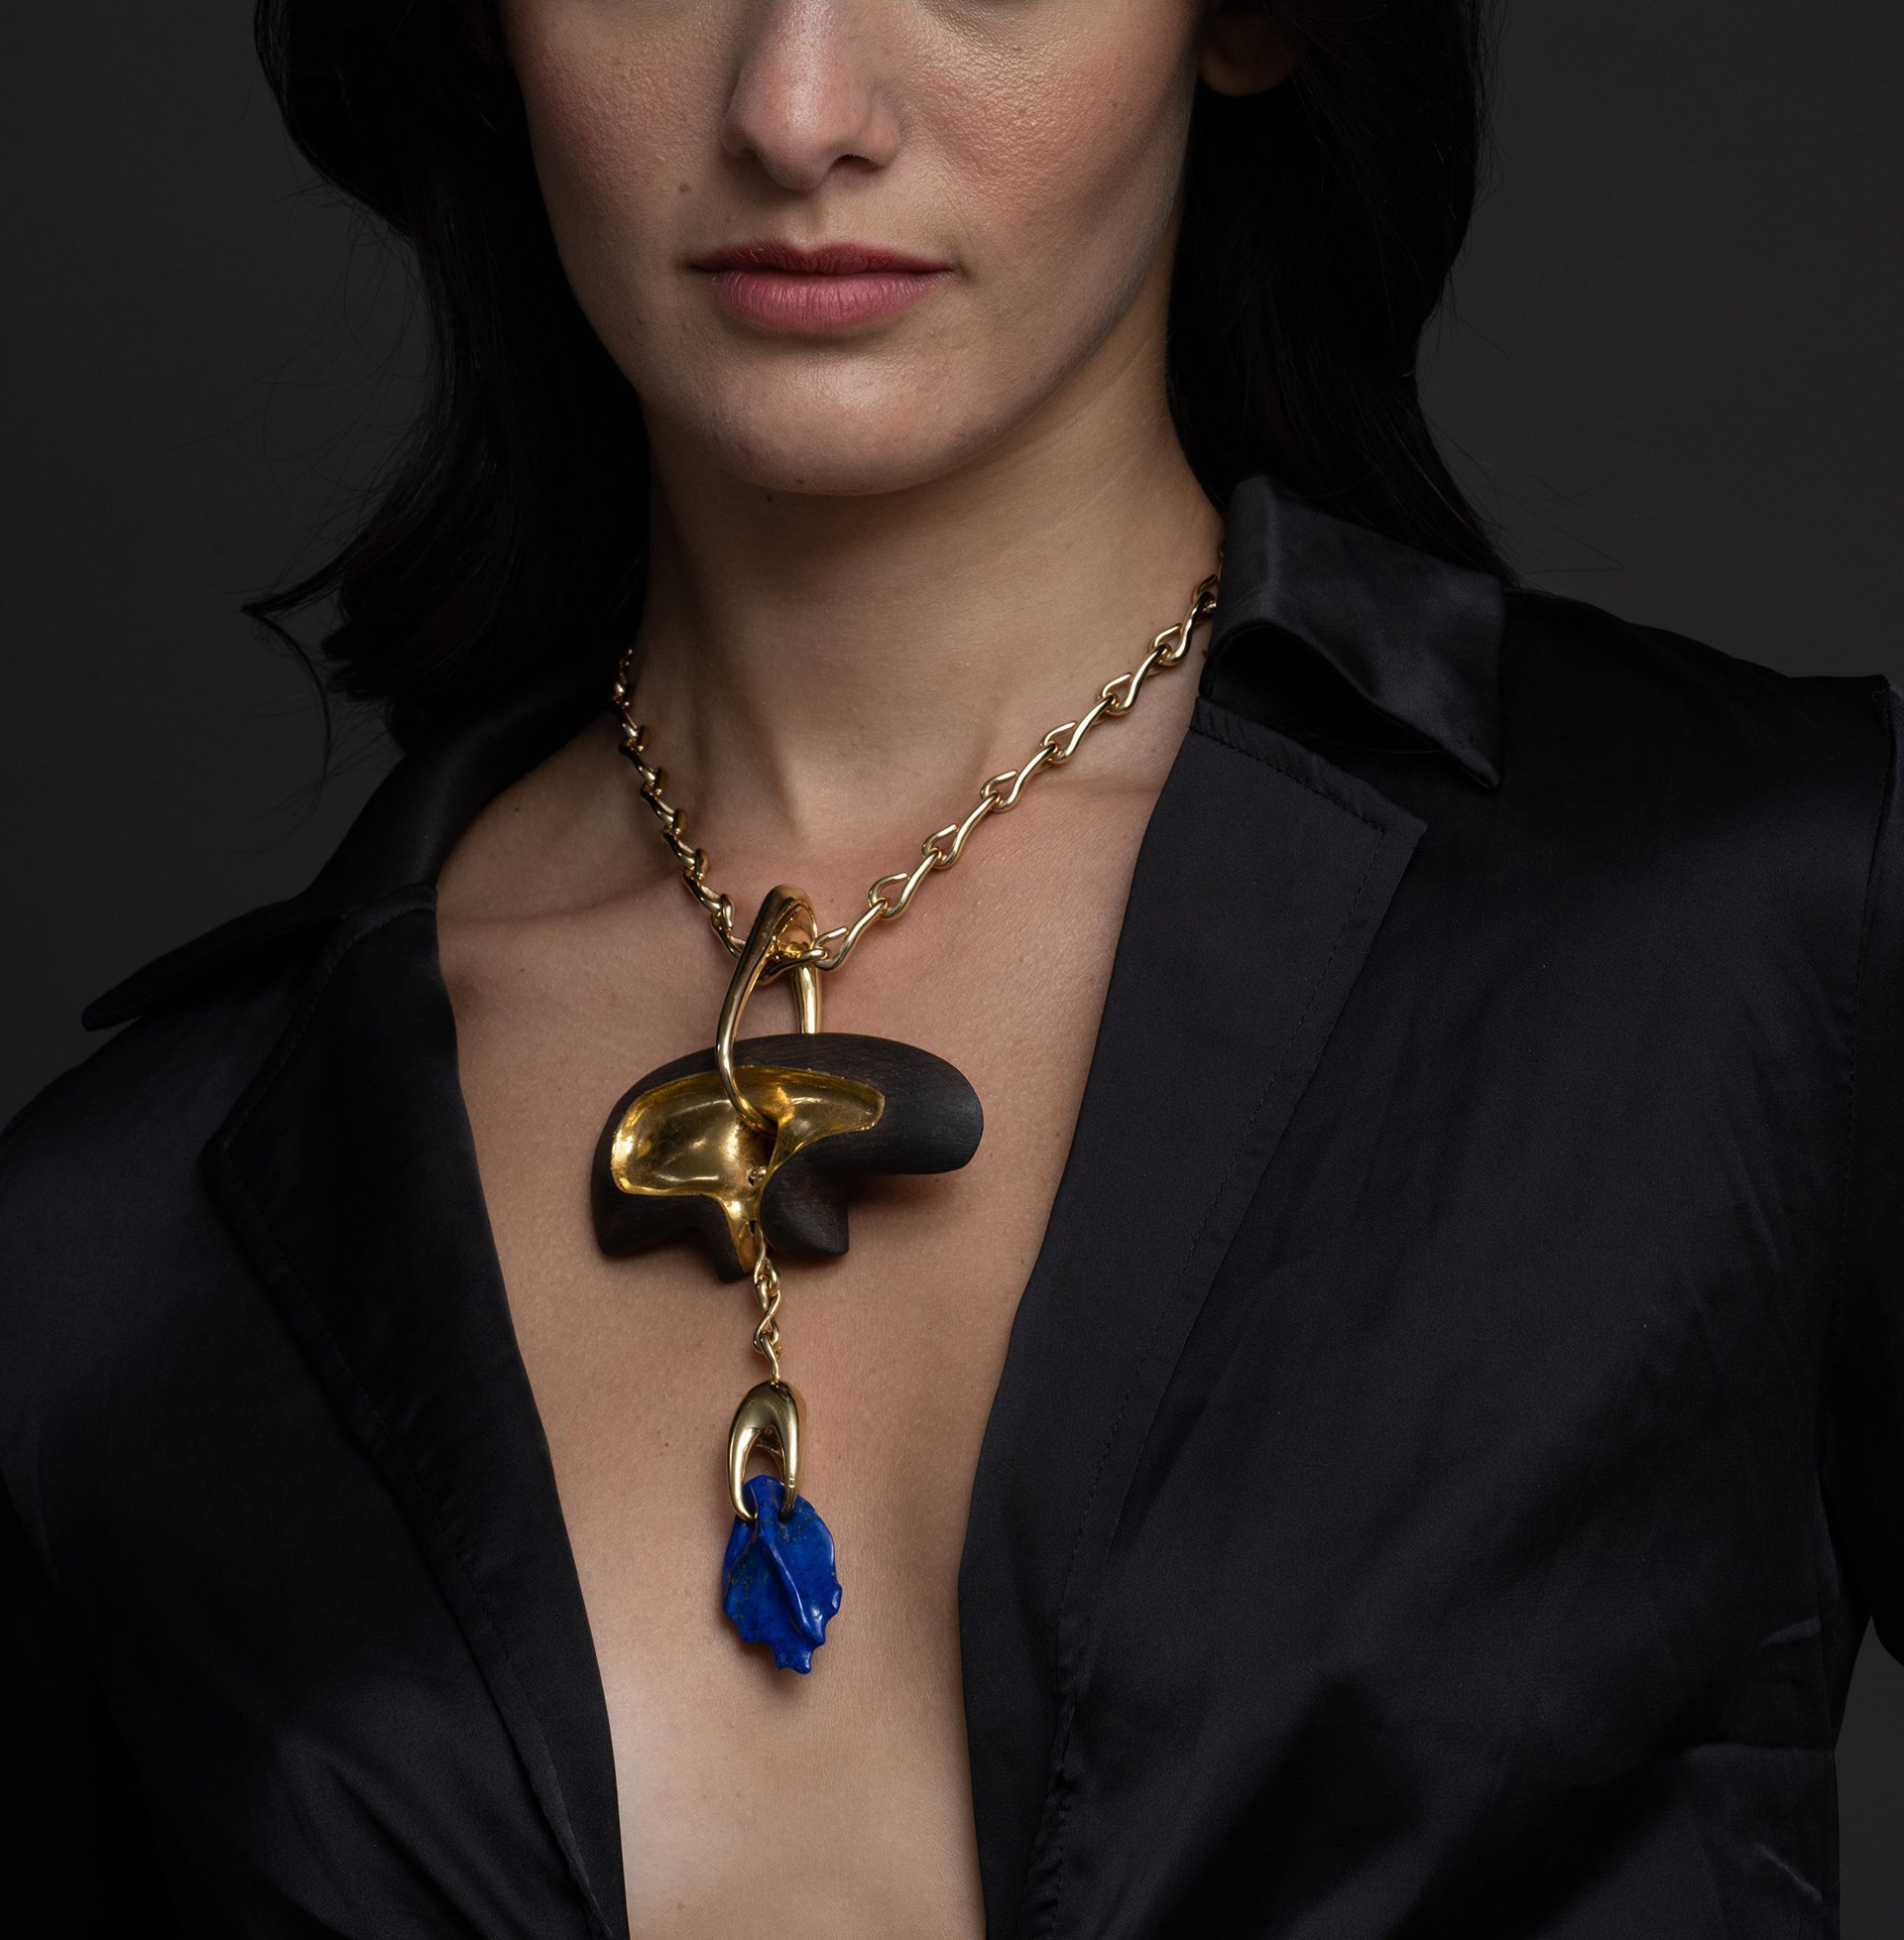 OJO-egypt-necklaces-collection-julio-martinez-barnetche-marion-friedmann-gallery-LR-egypt305-cut.jpg